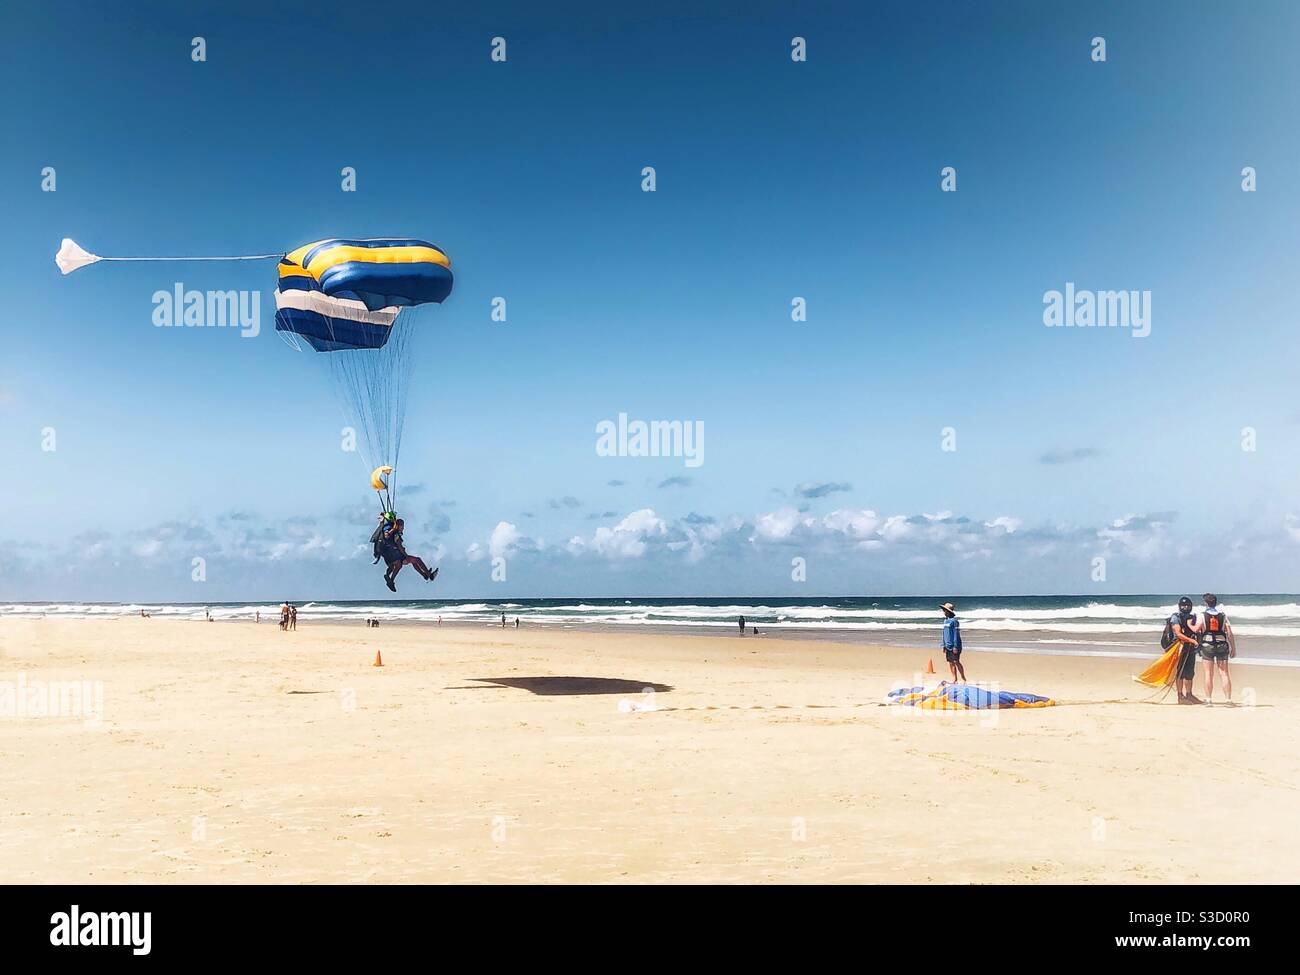 Parachute sky diving tandem adventure sports Sunshine Coast Queensland Stock Photo